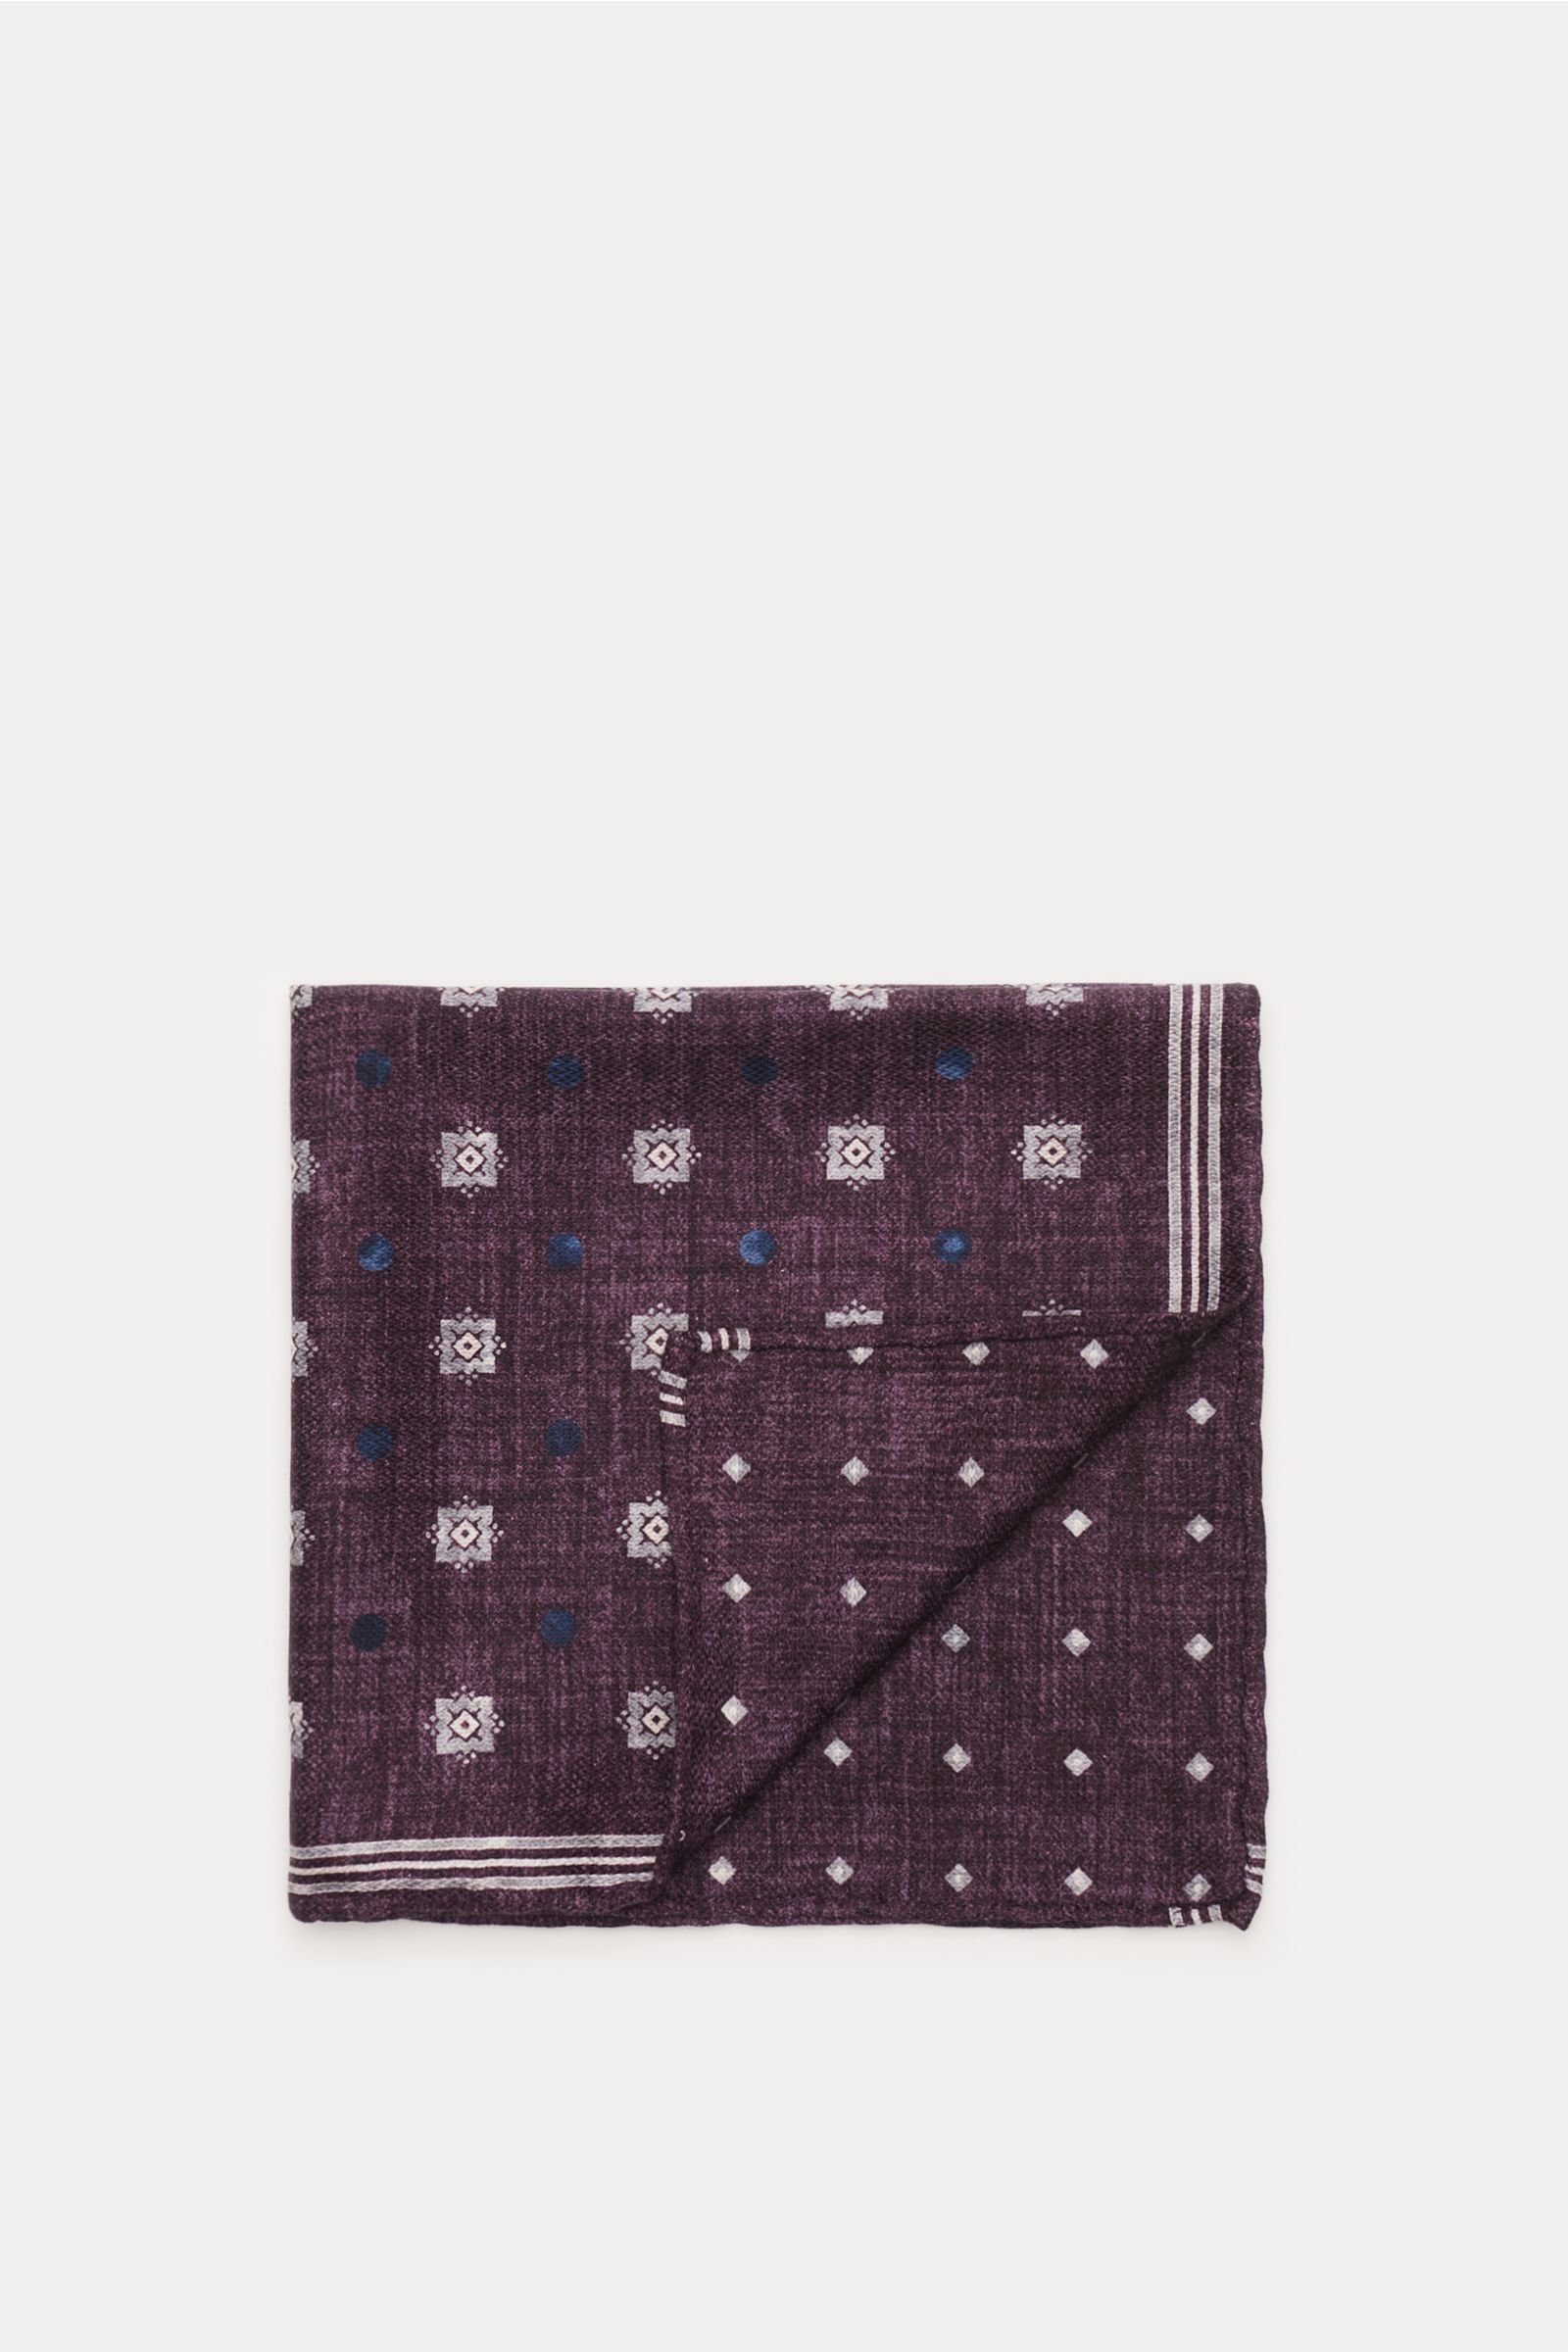 Pocket square purple/light grey patterned